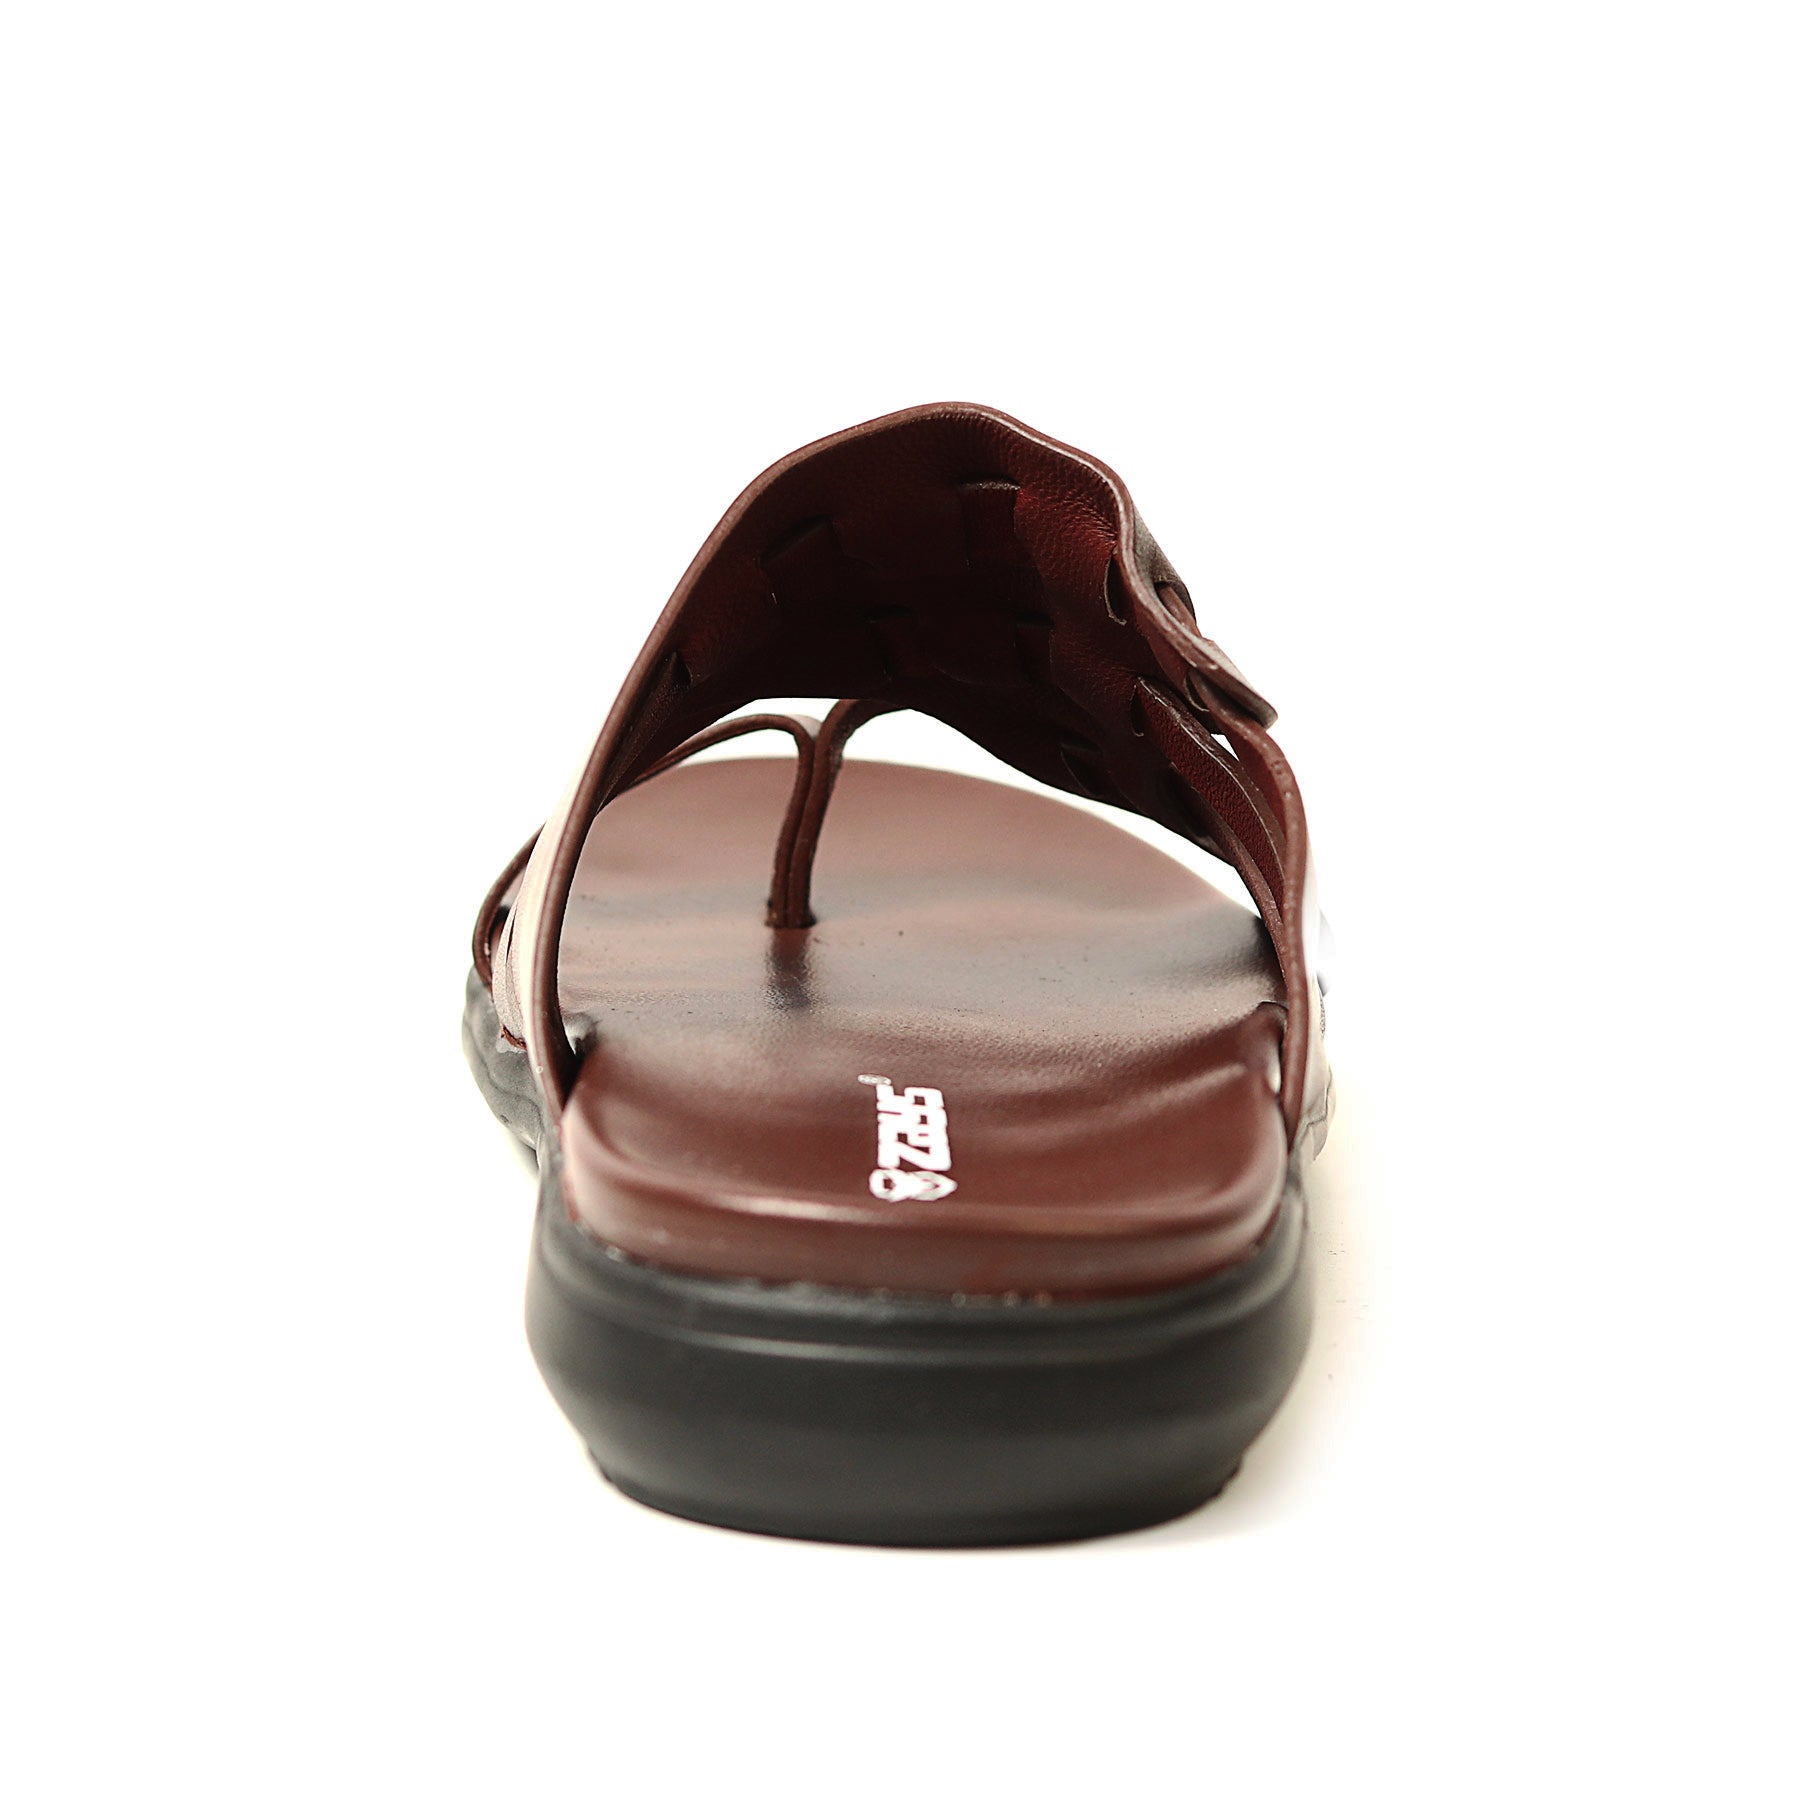 Zays Leather Sandal For Men (Chocolate) - ZA18